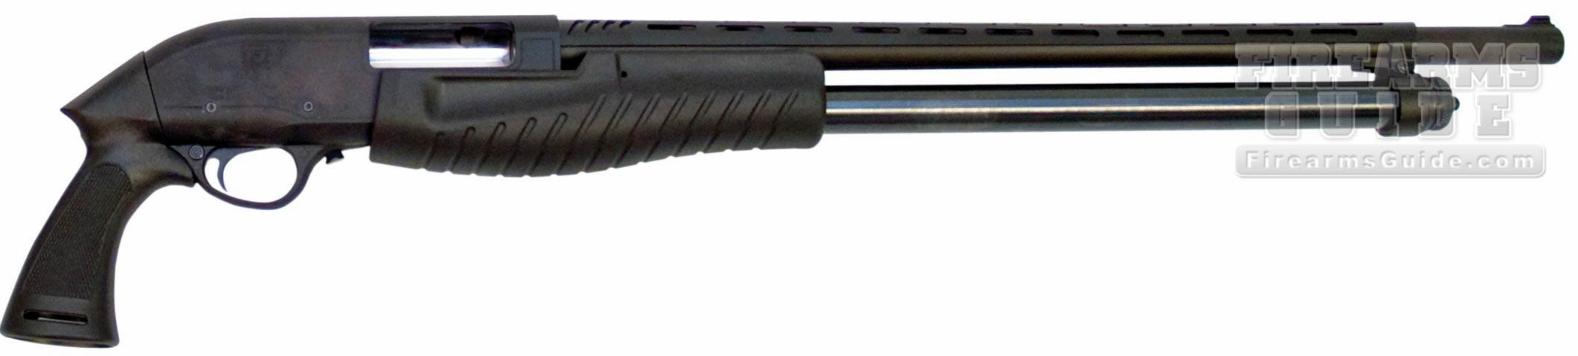 Citadel Firearms CIS12 Pistol Grip